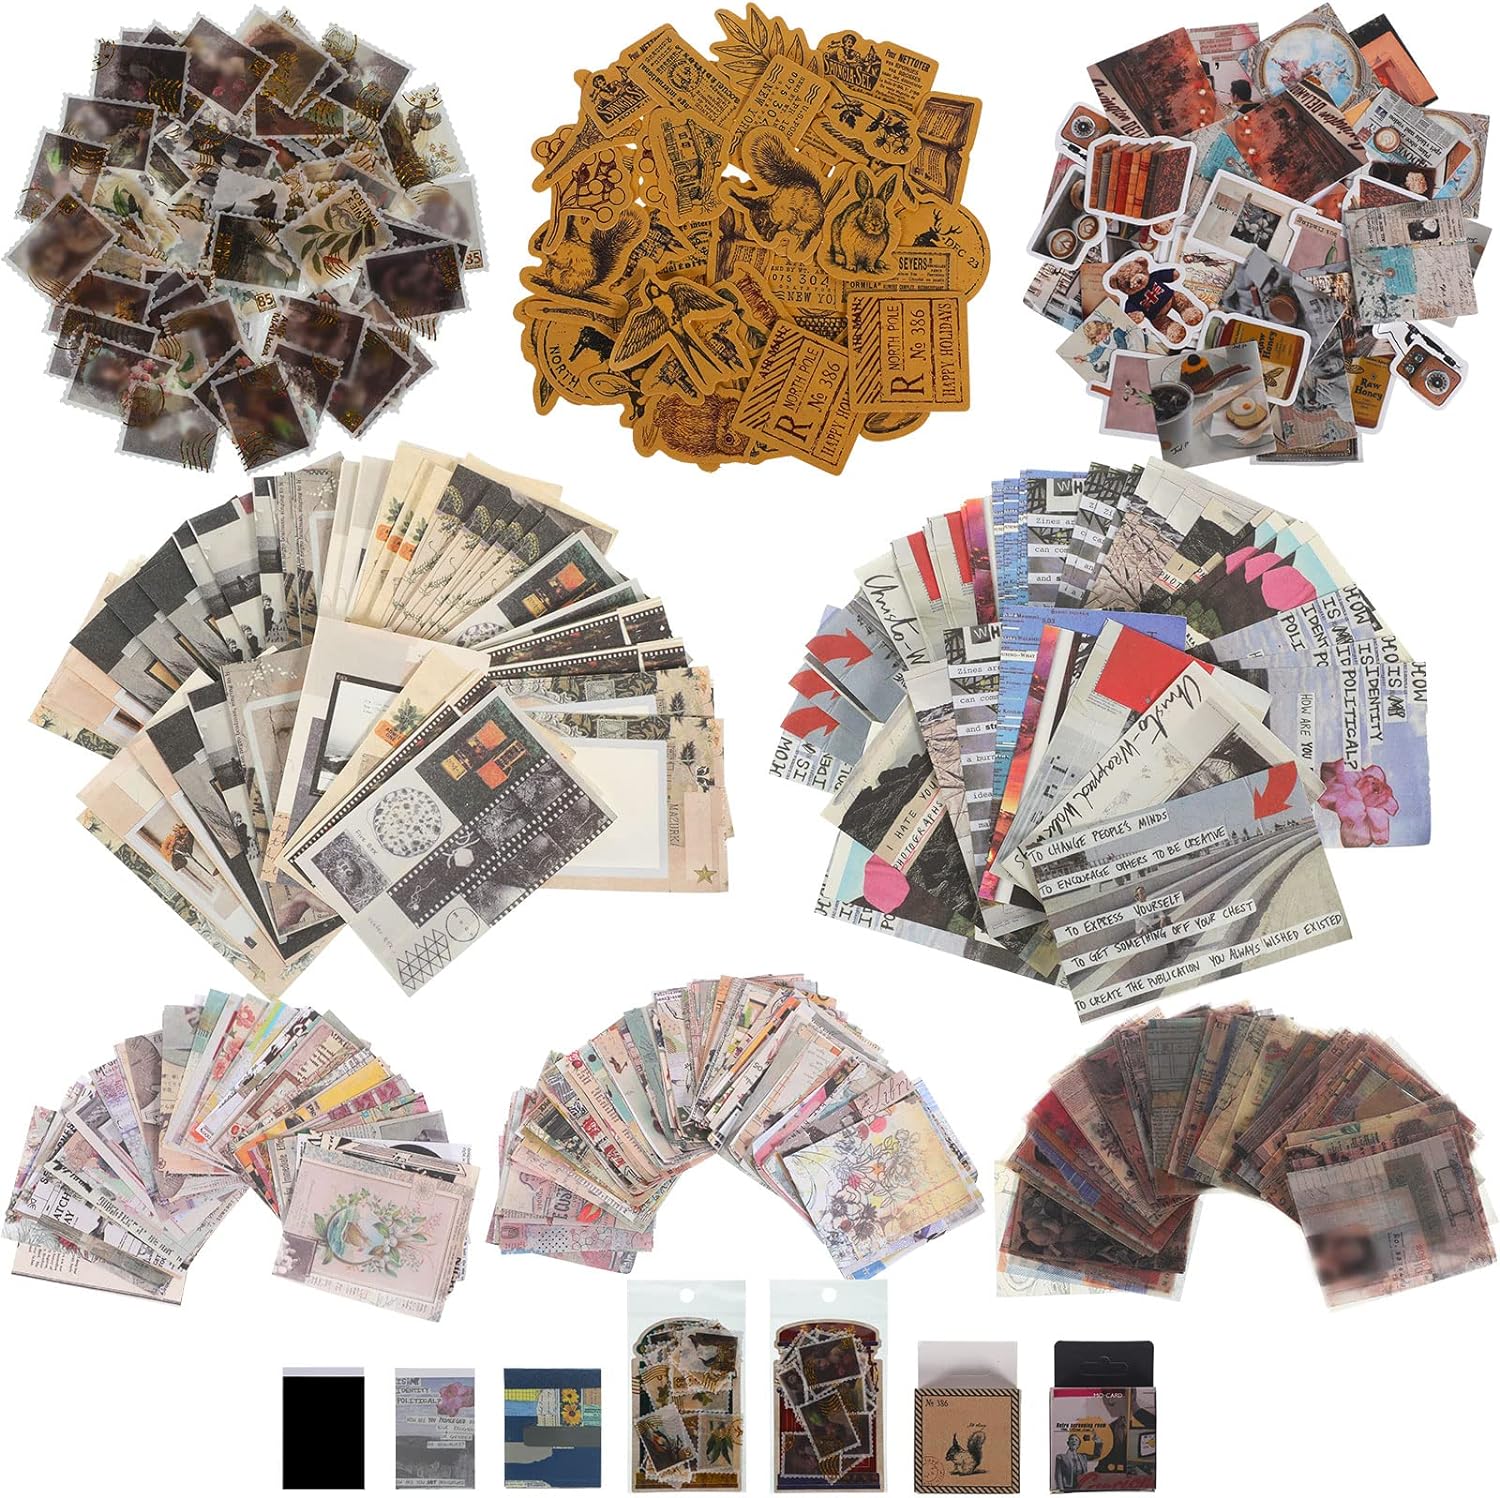 Retro Images Washi Tape Vintage Birds Style Stamp Washi Tape Postage Stamp Washi Tape Junk Journal Supplies